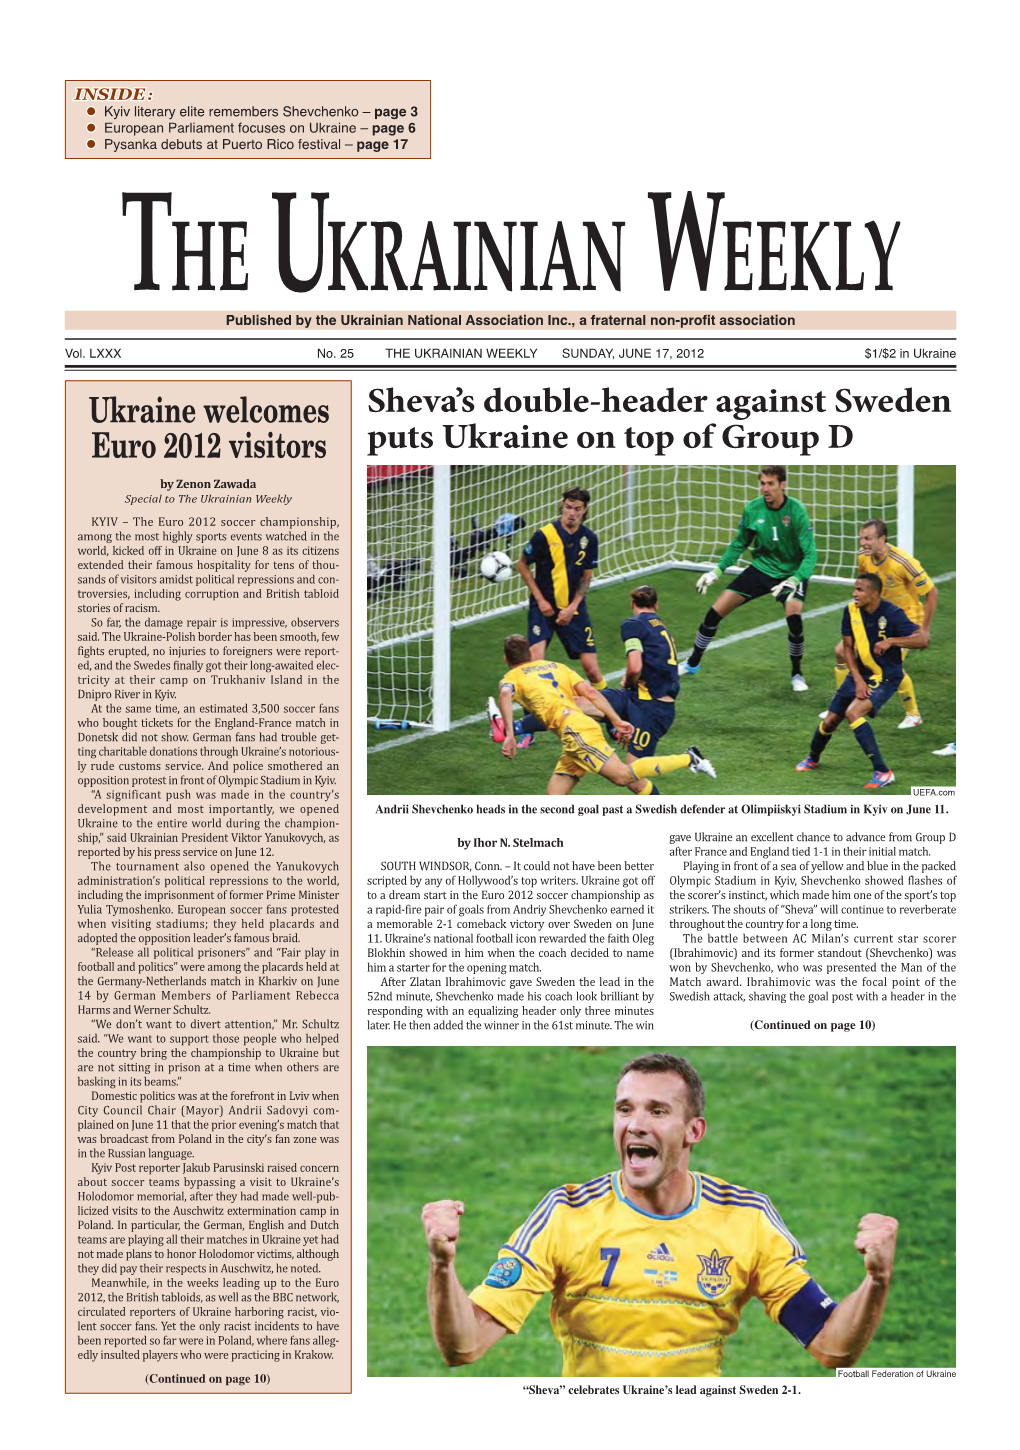 The Ukrainian Weekly 2012, No.25